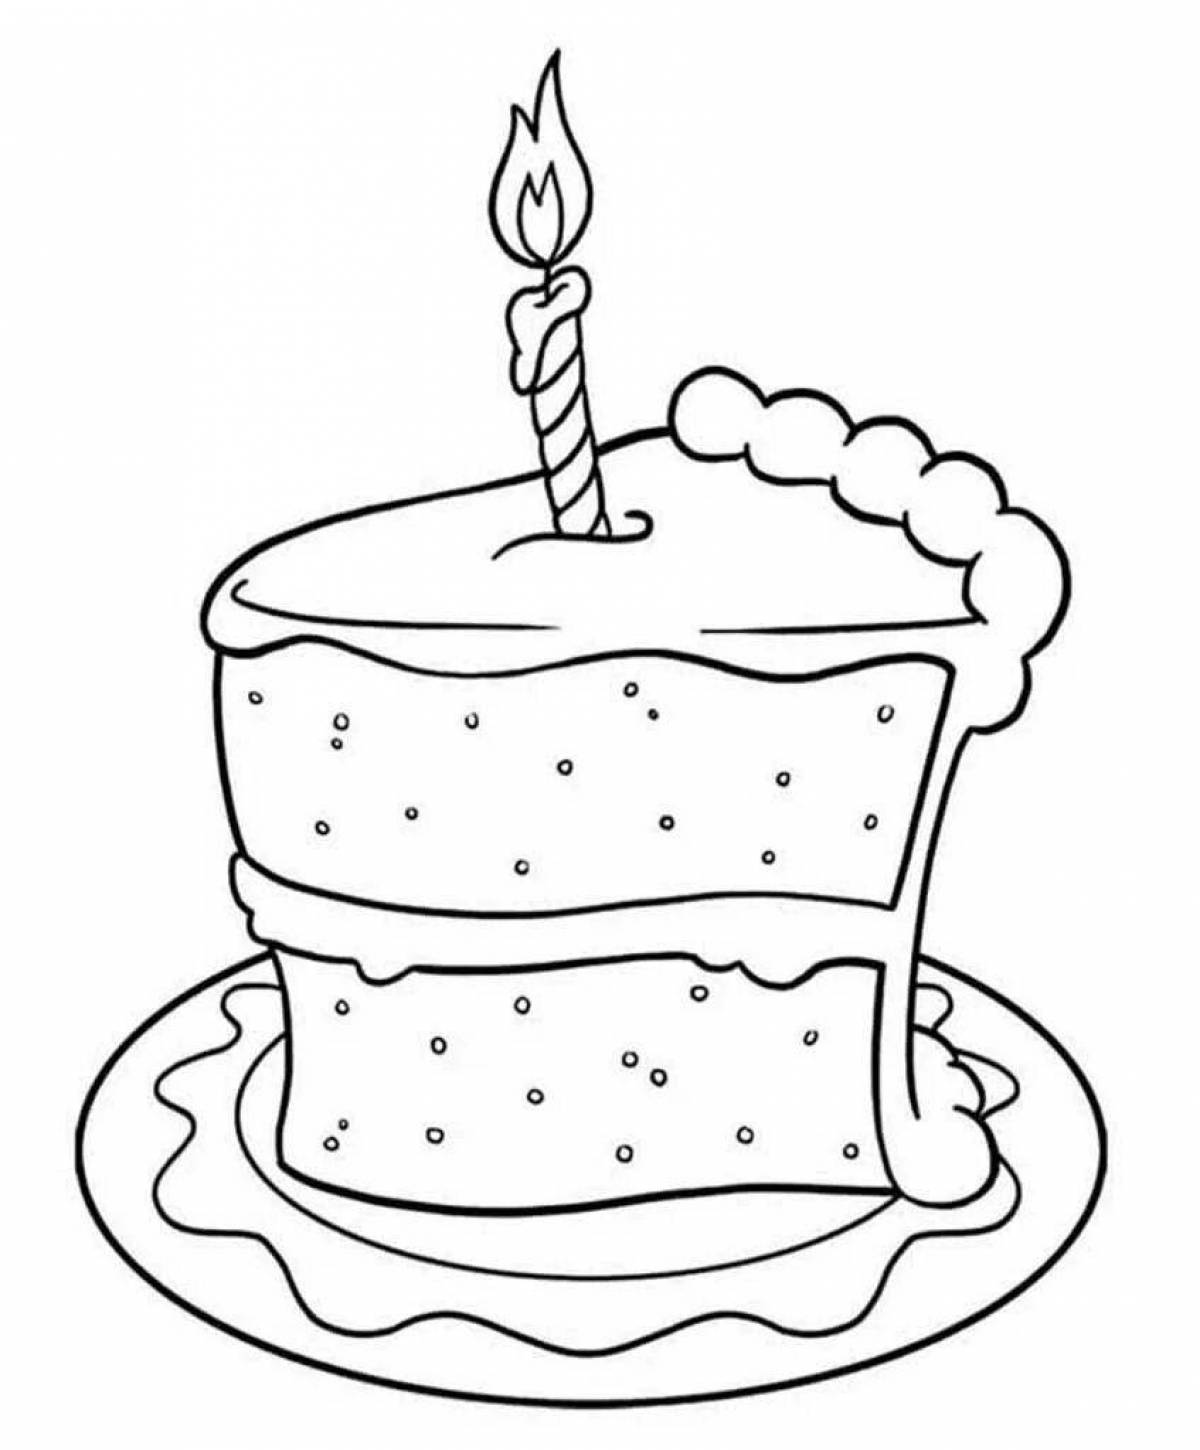 Ambrosia cake drawing page